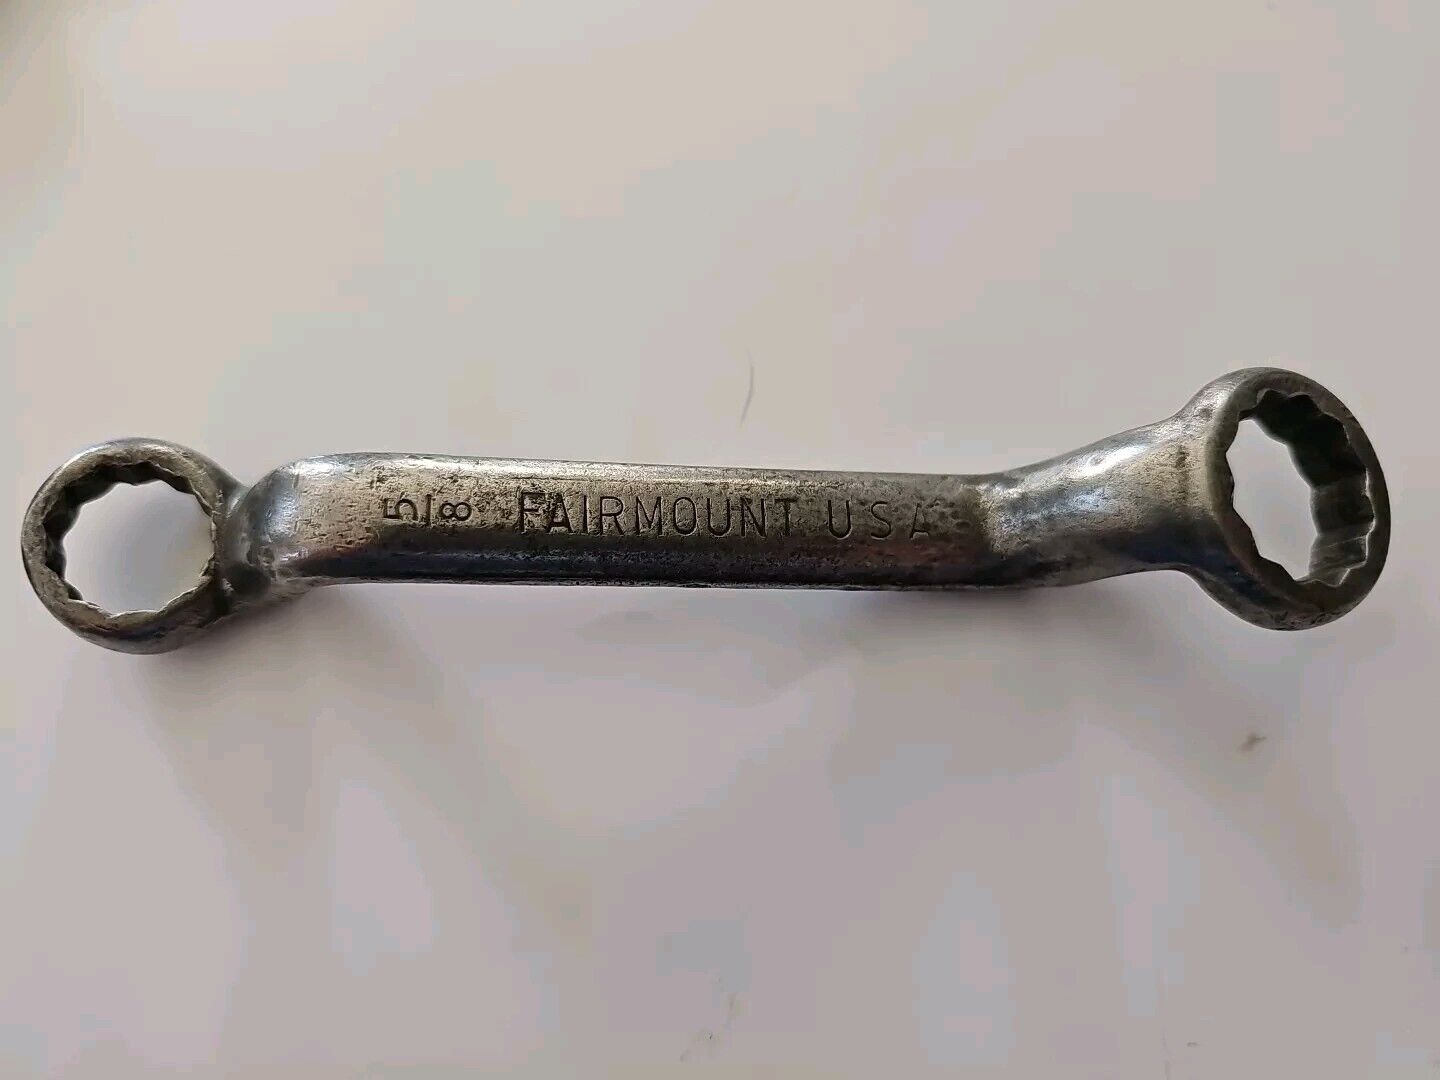 Fairmount 9727 Special 5/8x3/4 Short Offset Box-End Wrench Rare Collectable 